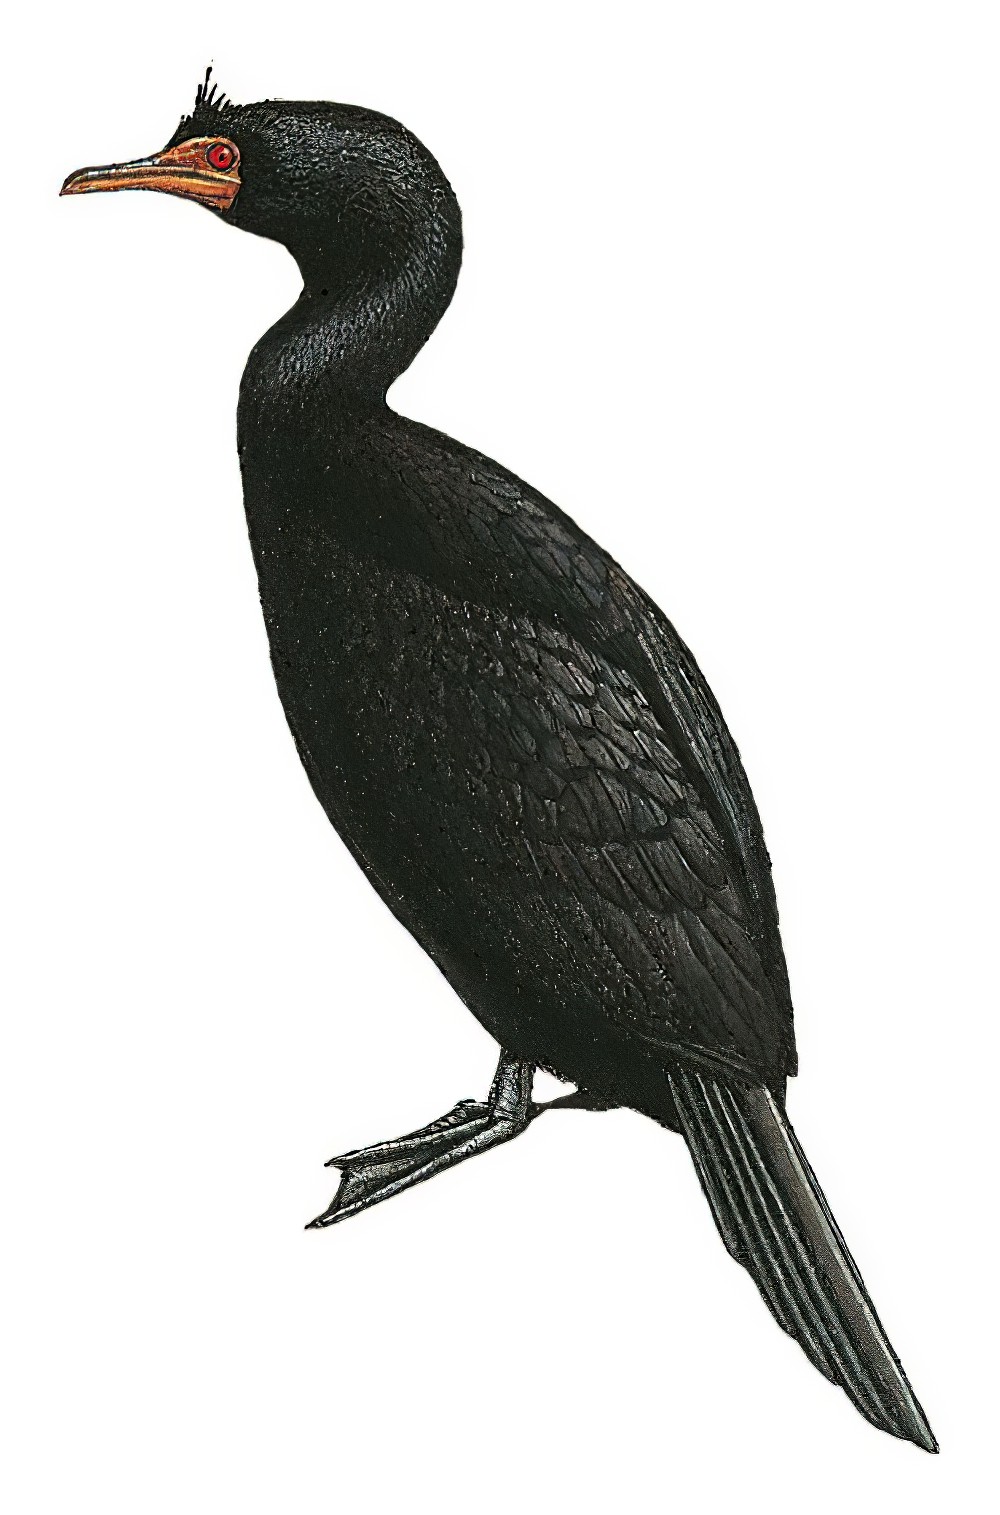 Crowned Cormorant / Microcarbo coronatus